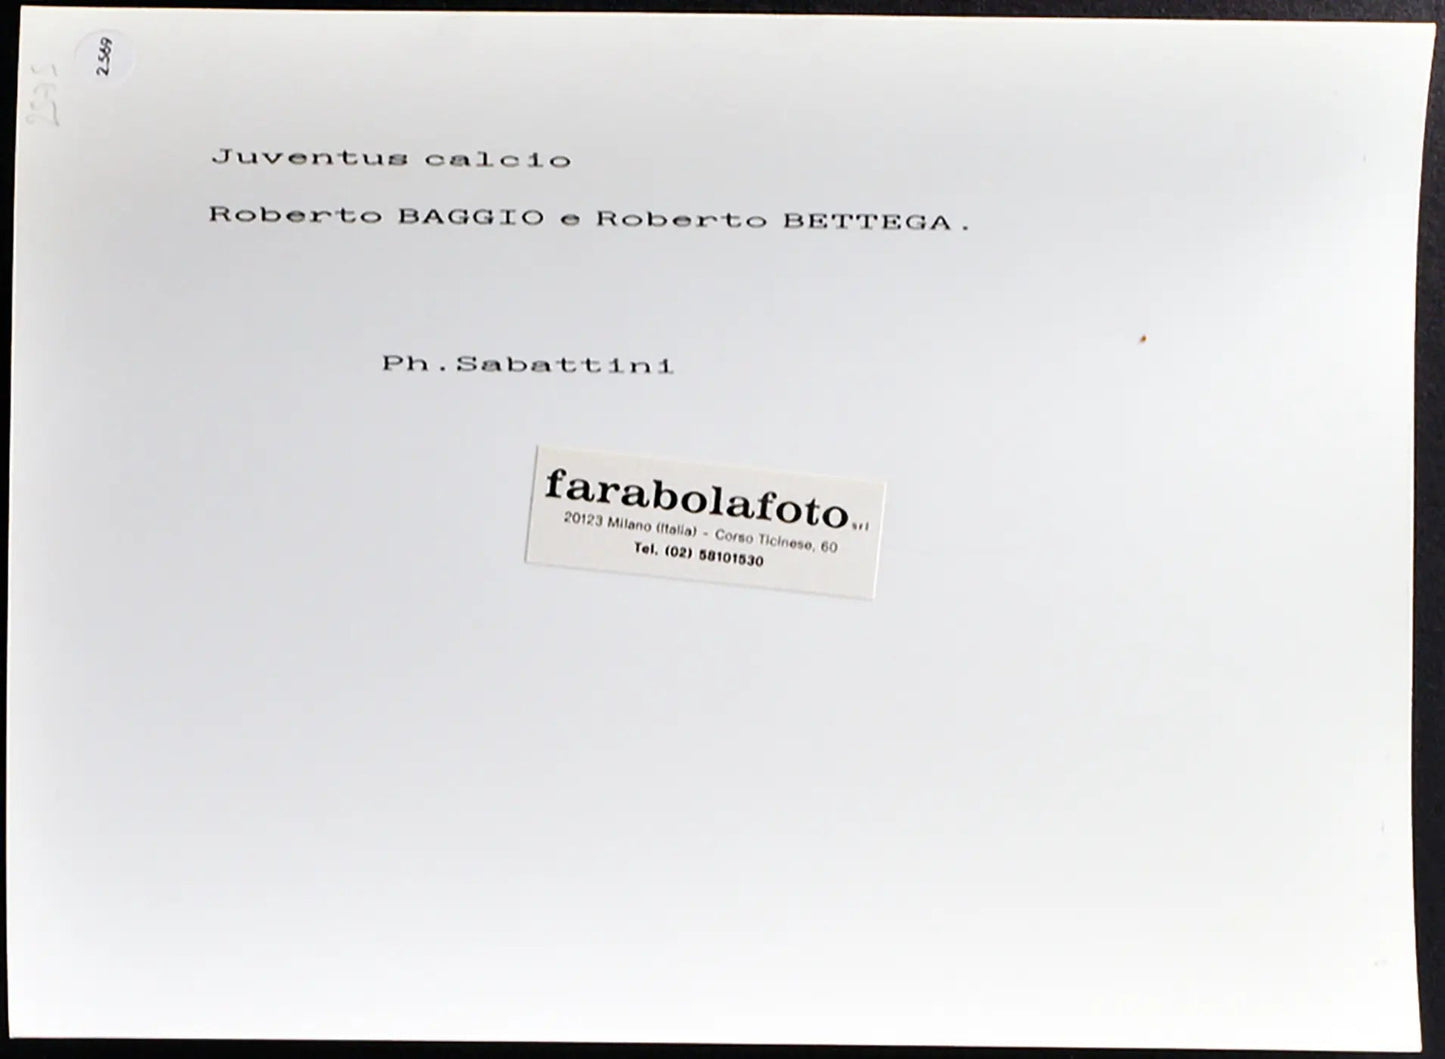 Baggio e Bettega Juventus 1990 Ft 2569 - Stampa 24x18 cm - Farabola Stampa ai sali d'argento